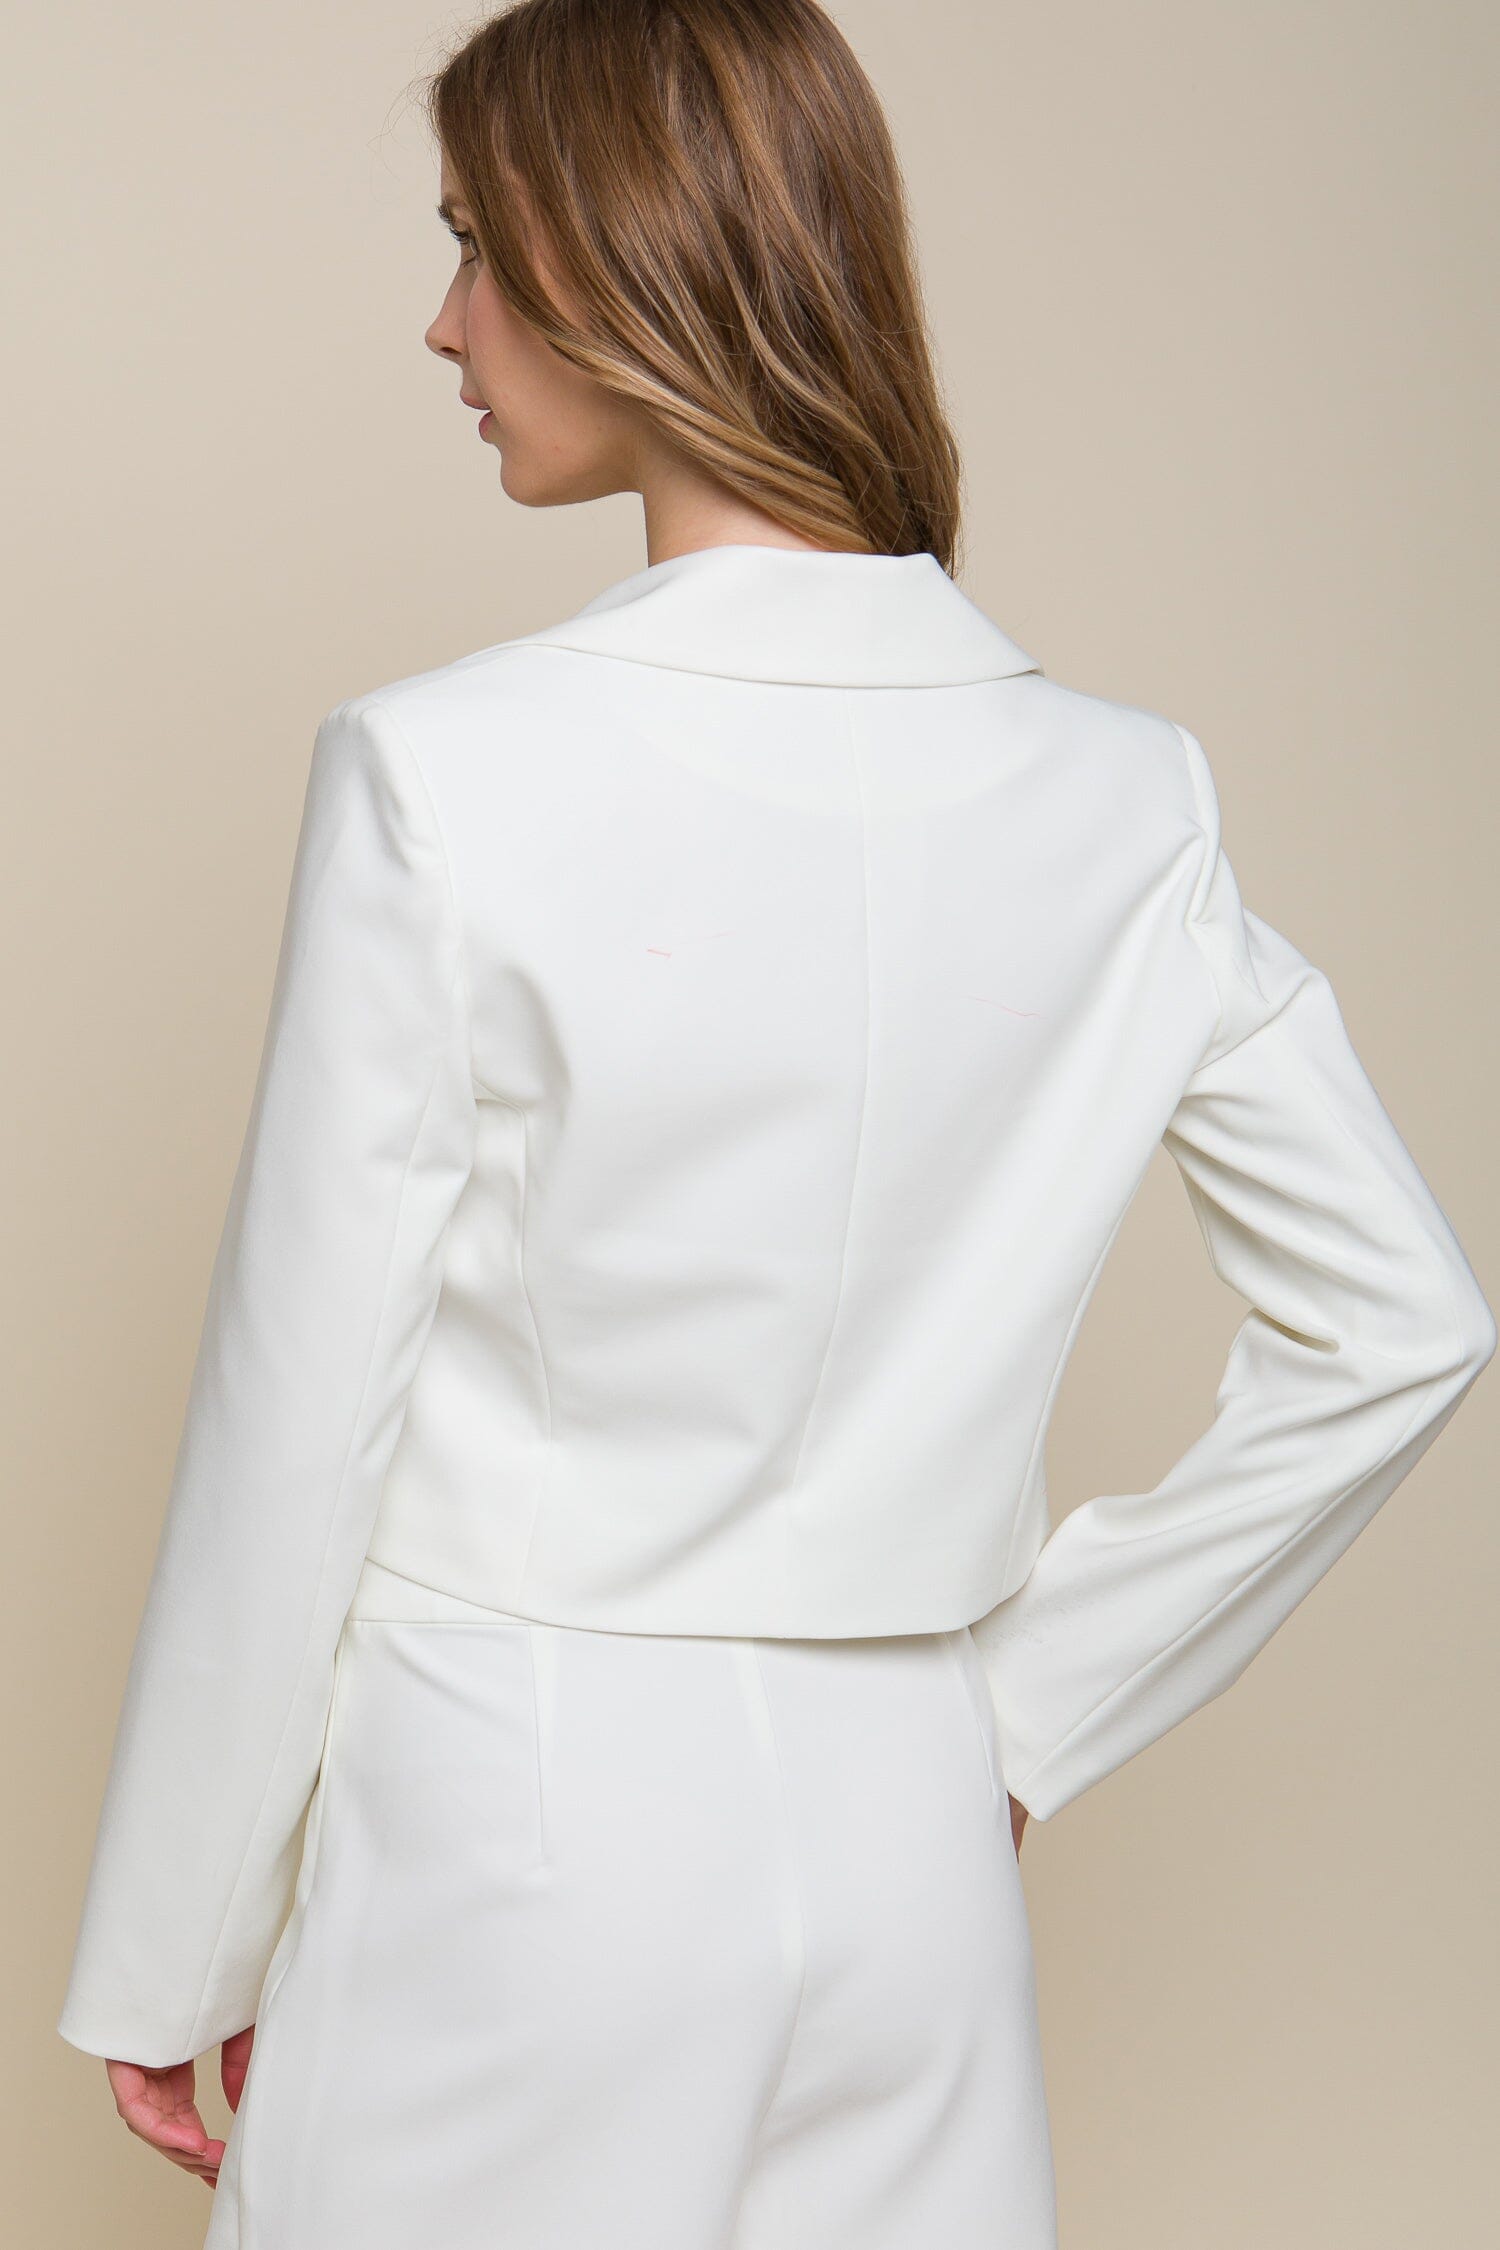 White Lapel Neck Long Sleeve Open Front Casual Business Work Cropped Blazer Jacket jehouze 